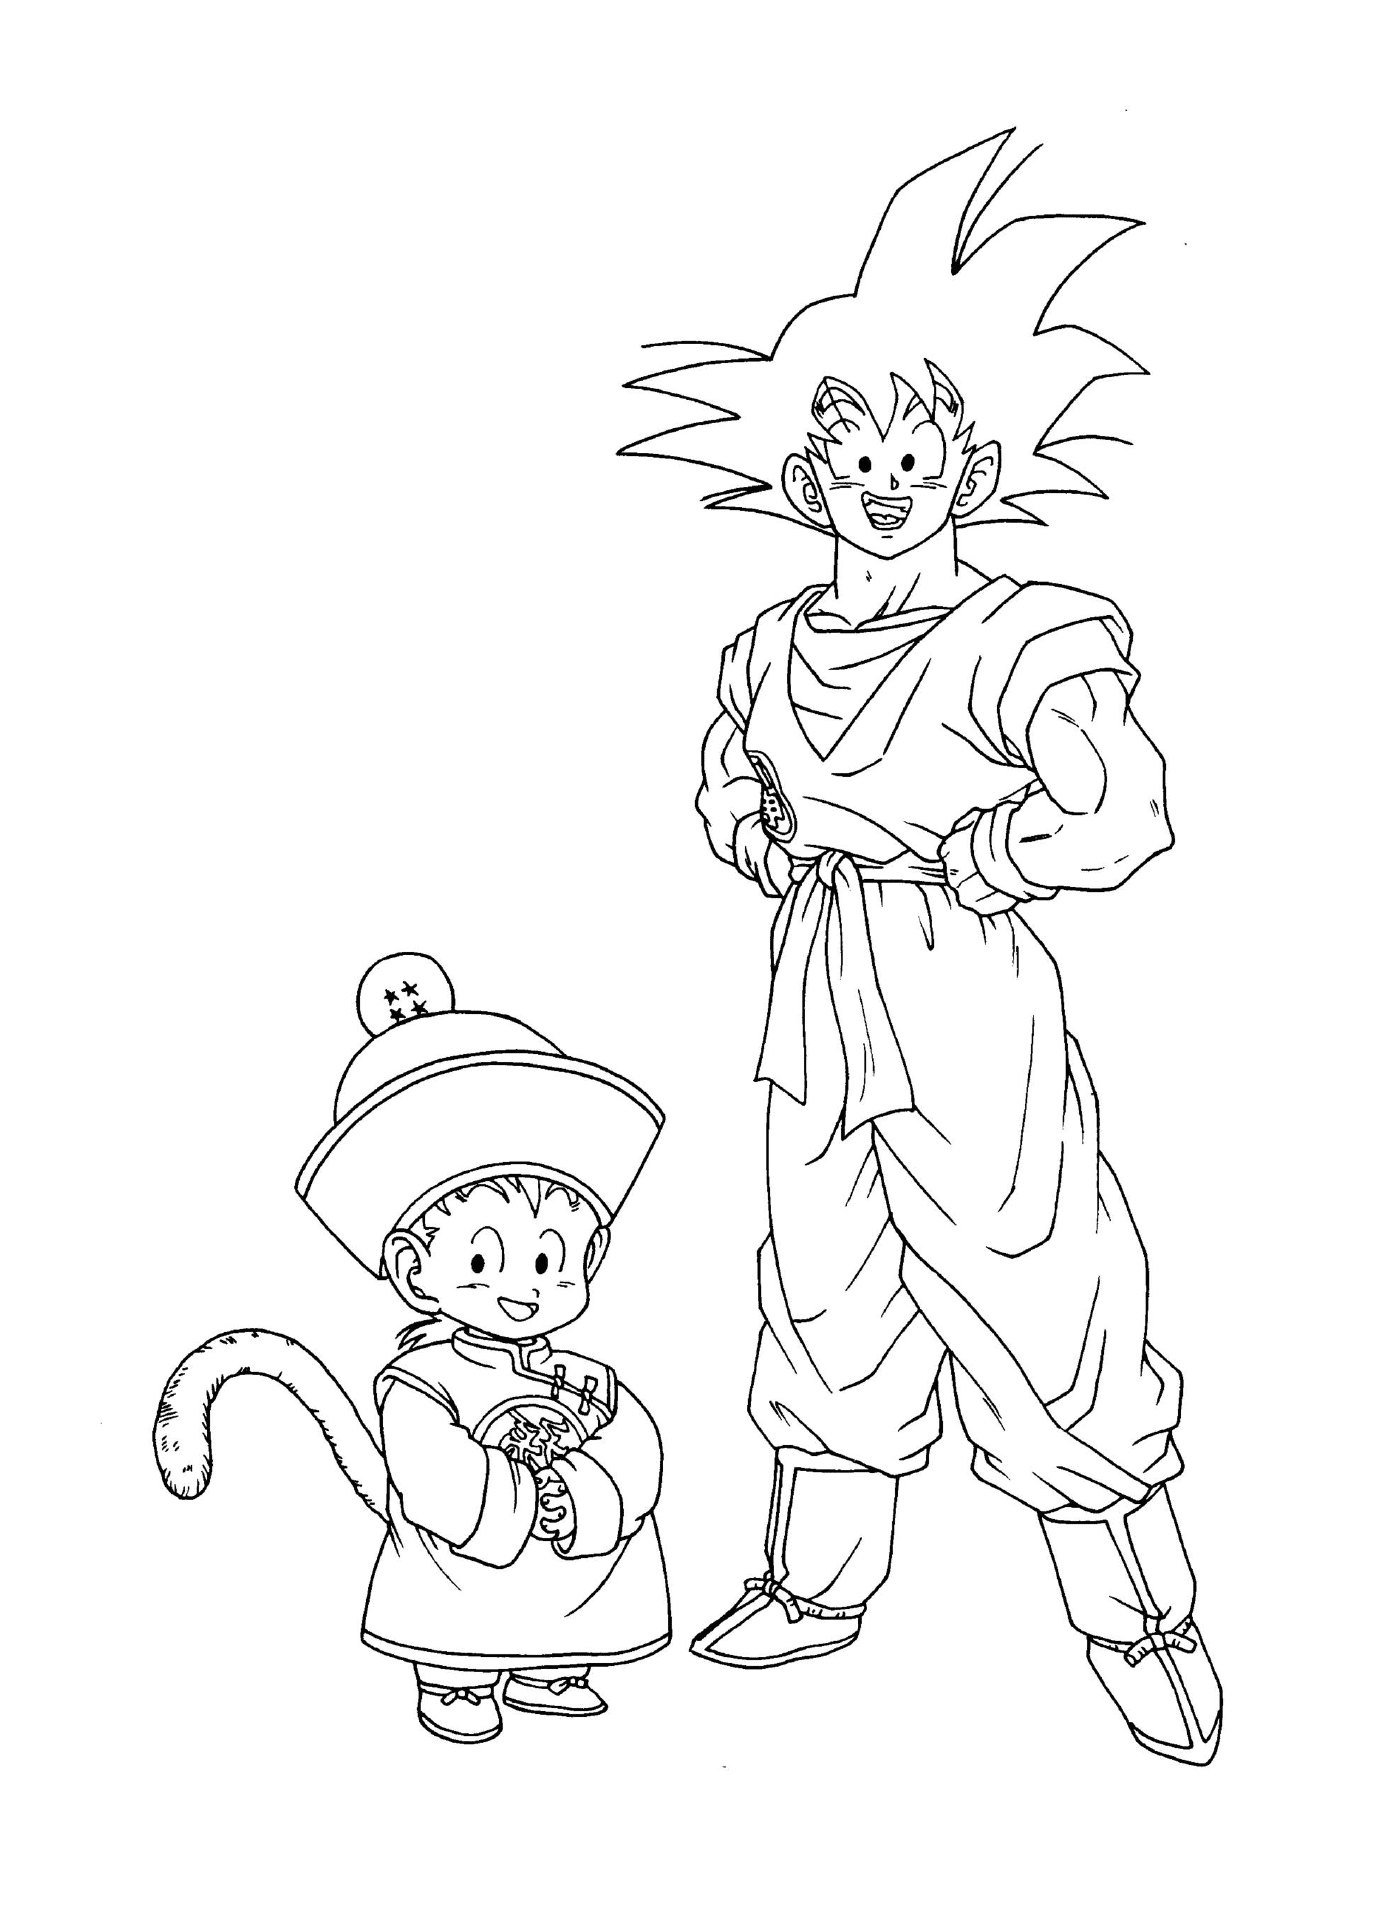  Personajes de Dragon Ball Z: Goku y Goten 